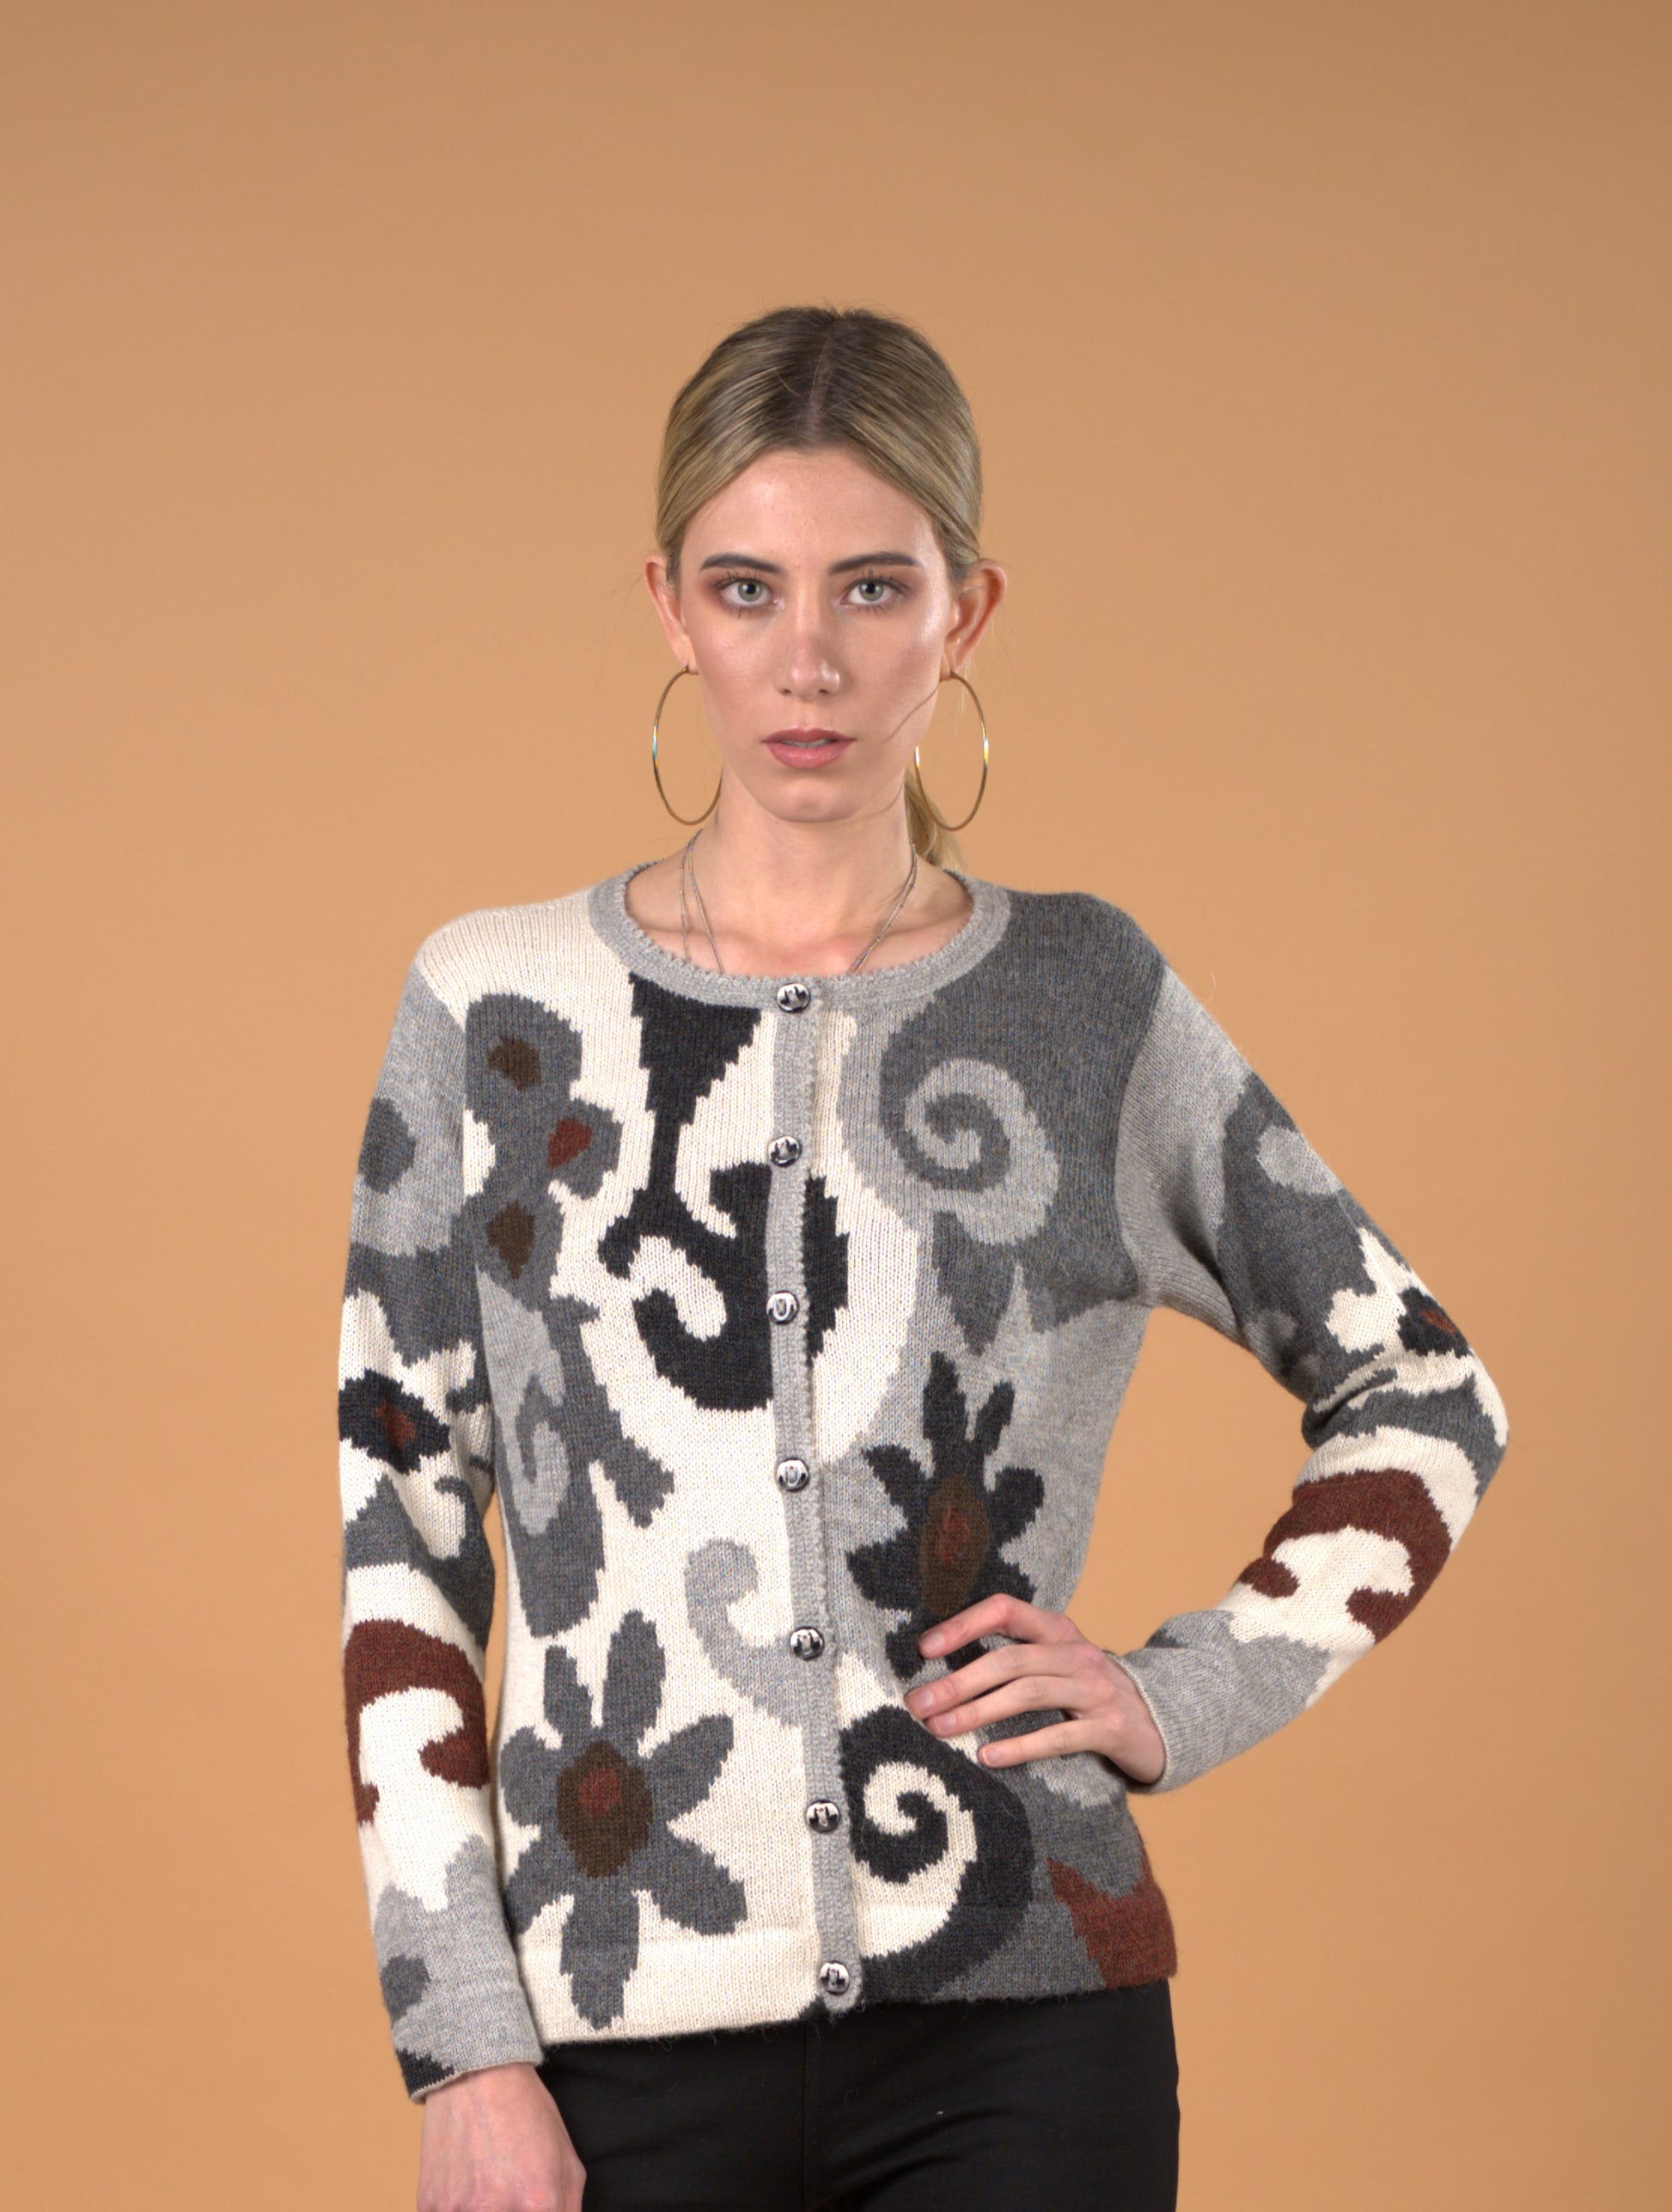 Luxurious alpaca sweater for women made with 100% Baby Alpaca fiber from Peru